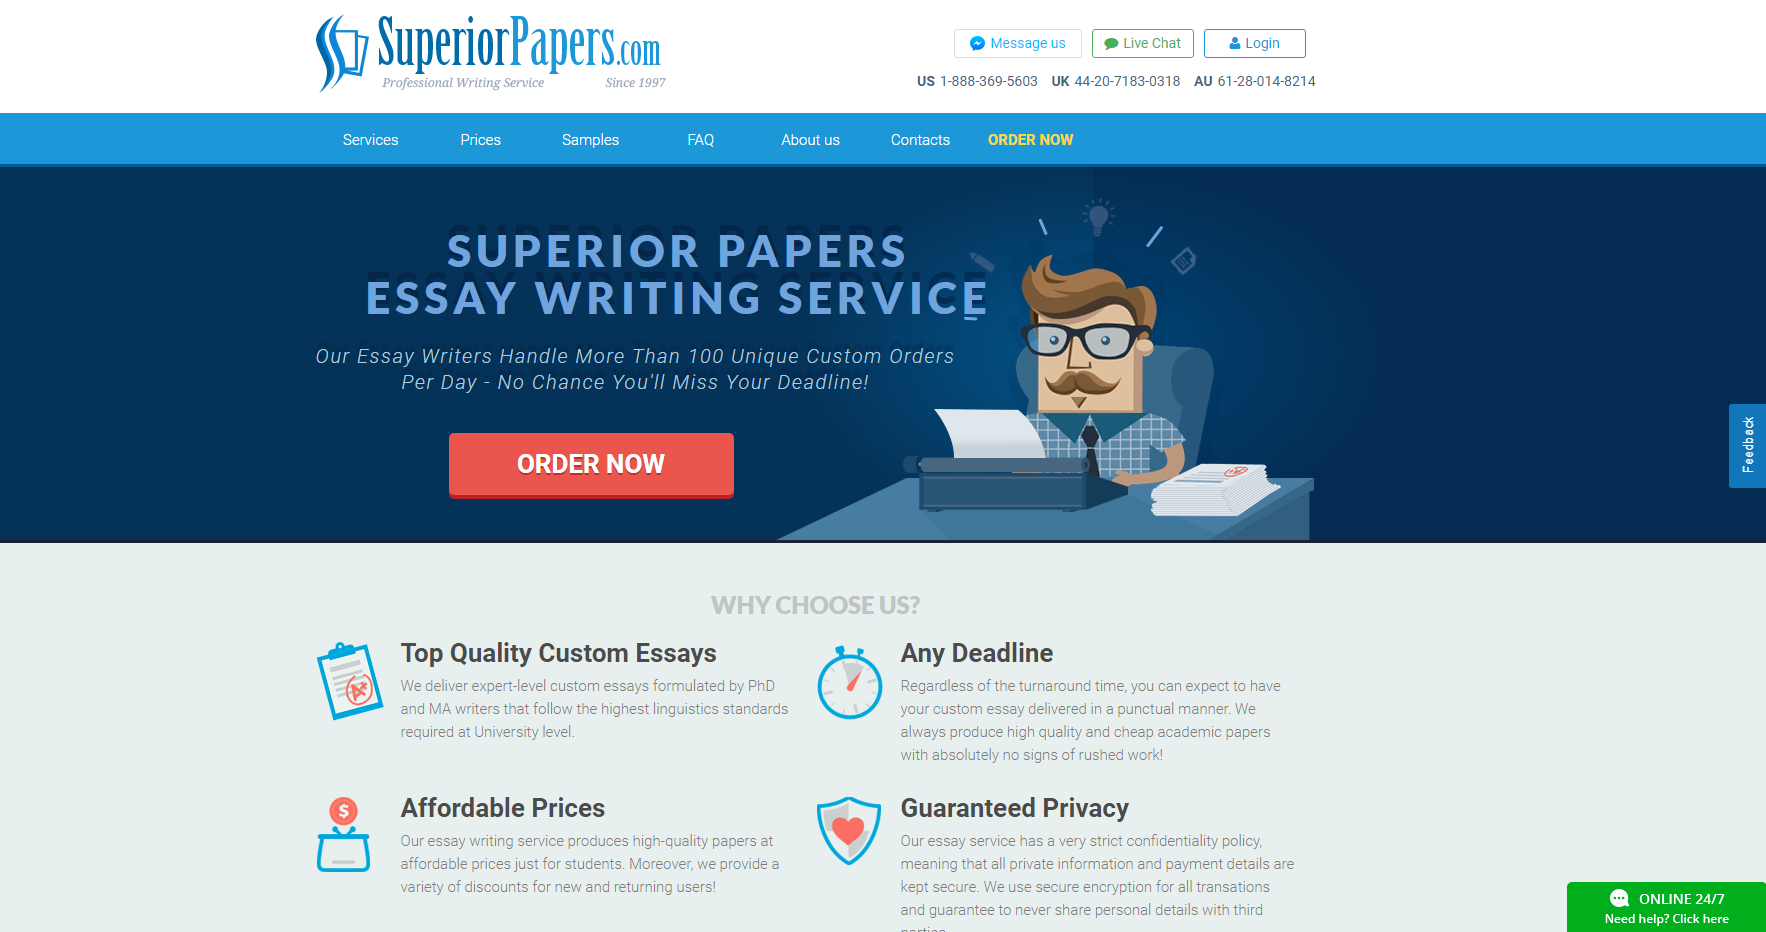 SuperiorPapers.com